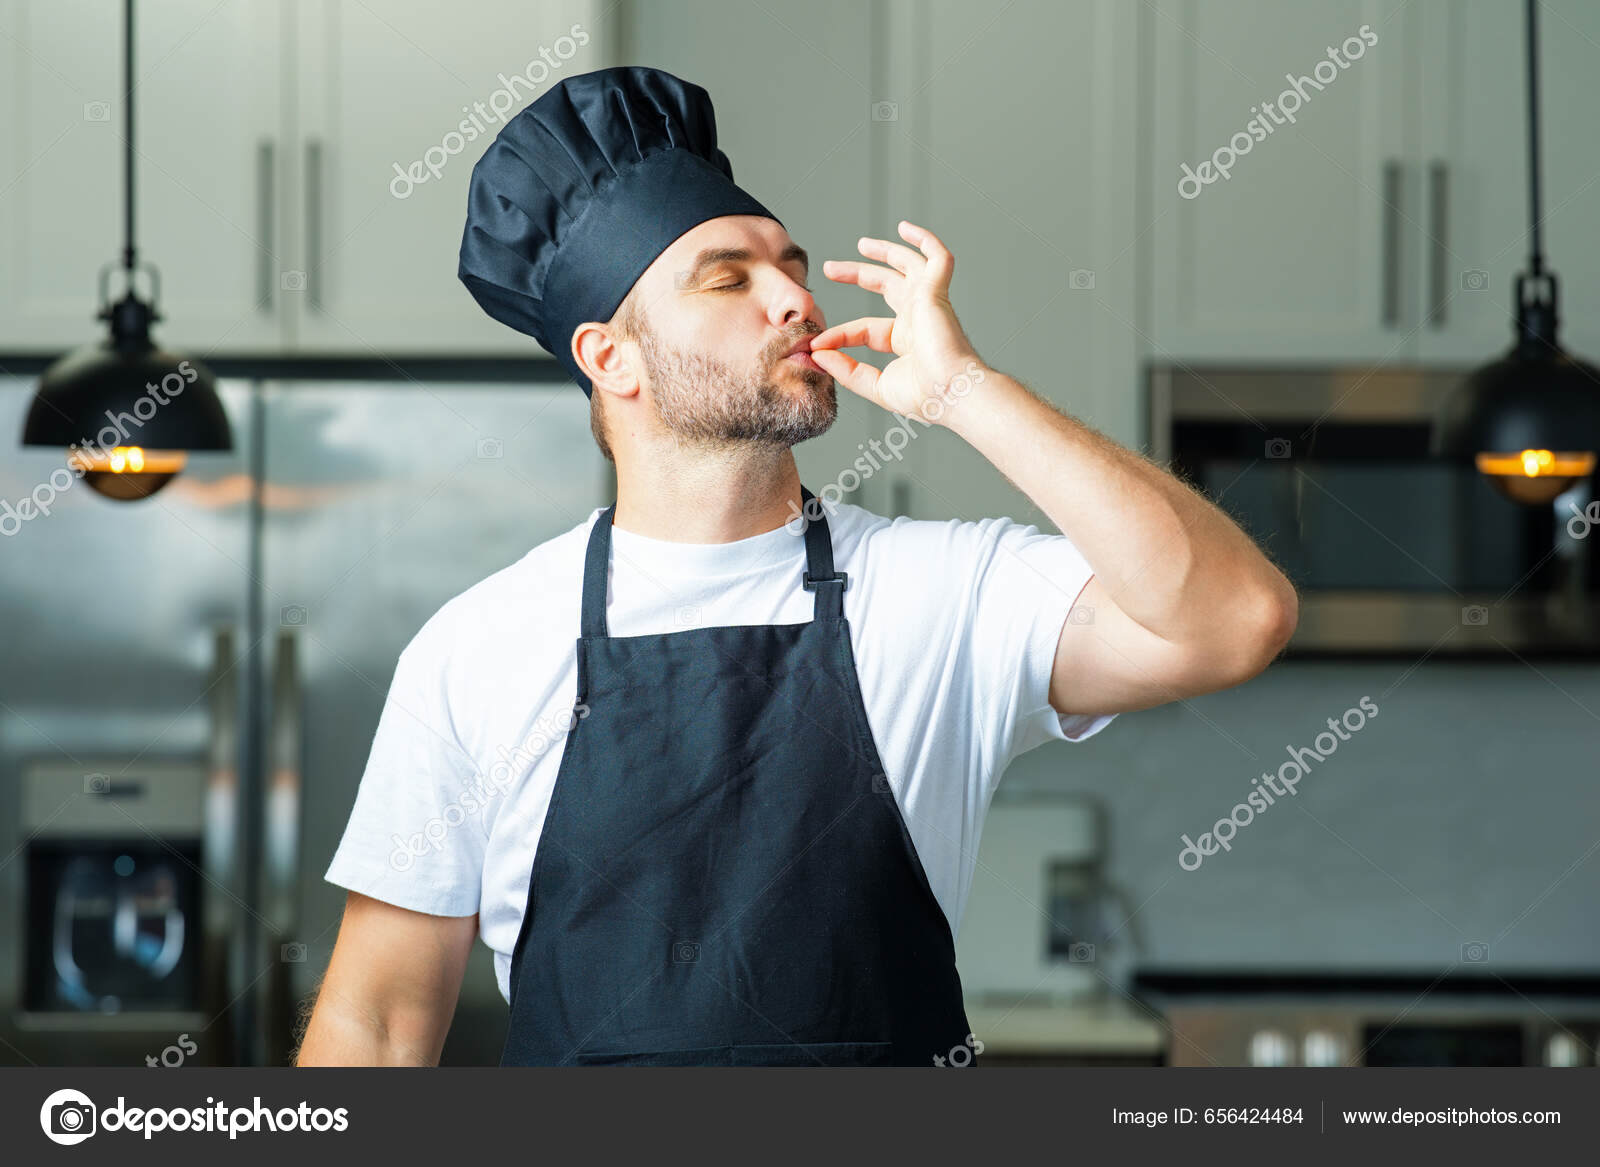 https://st5.depositphotos.com/3584053/65642/i/1600/depositphotos_656424484-stock-photo-man-chef-cooker-baker-man.jpg